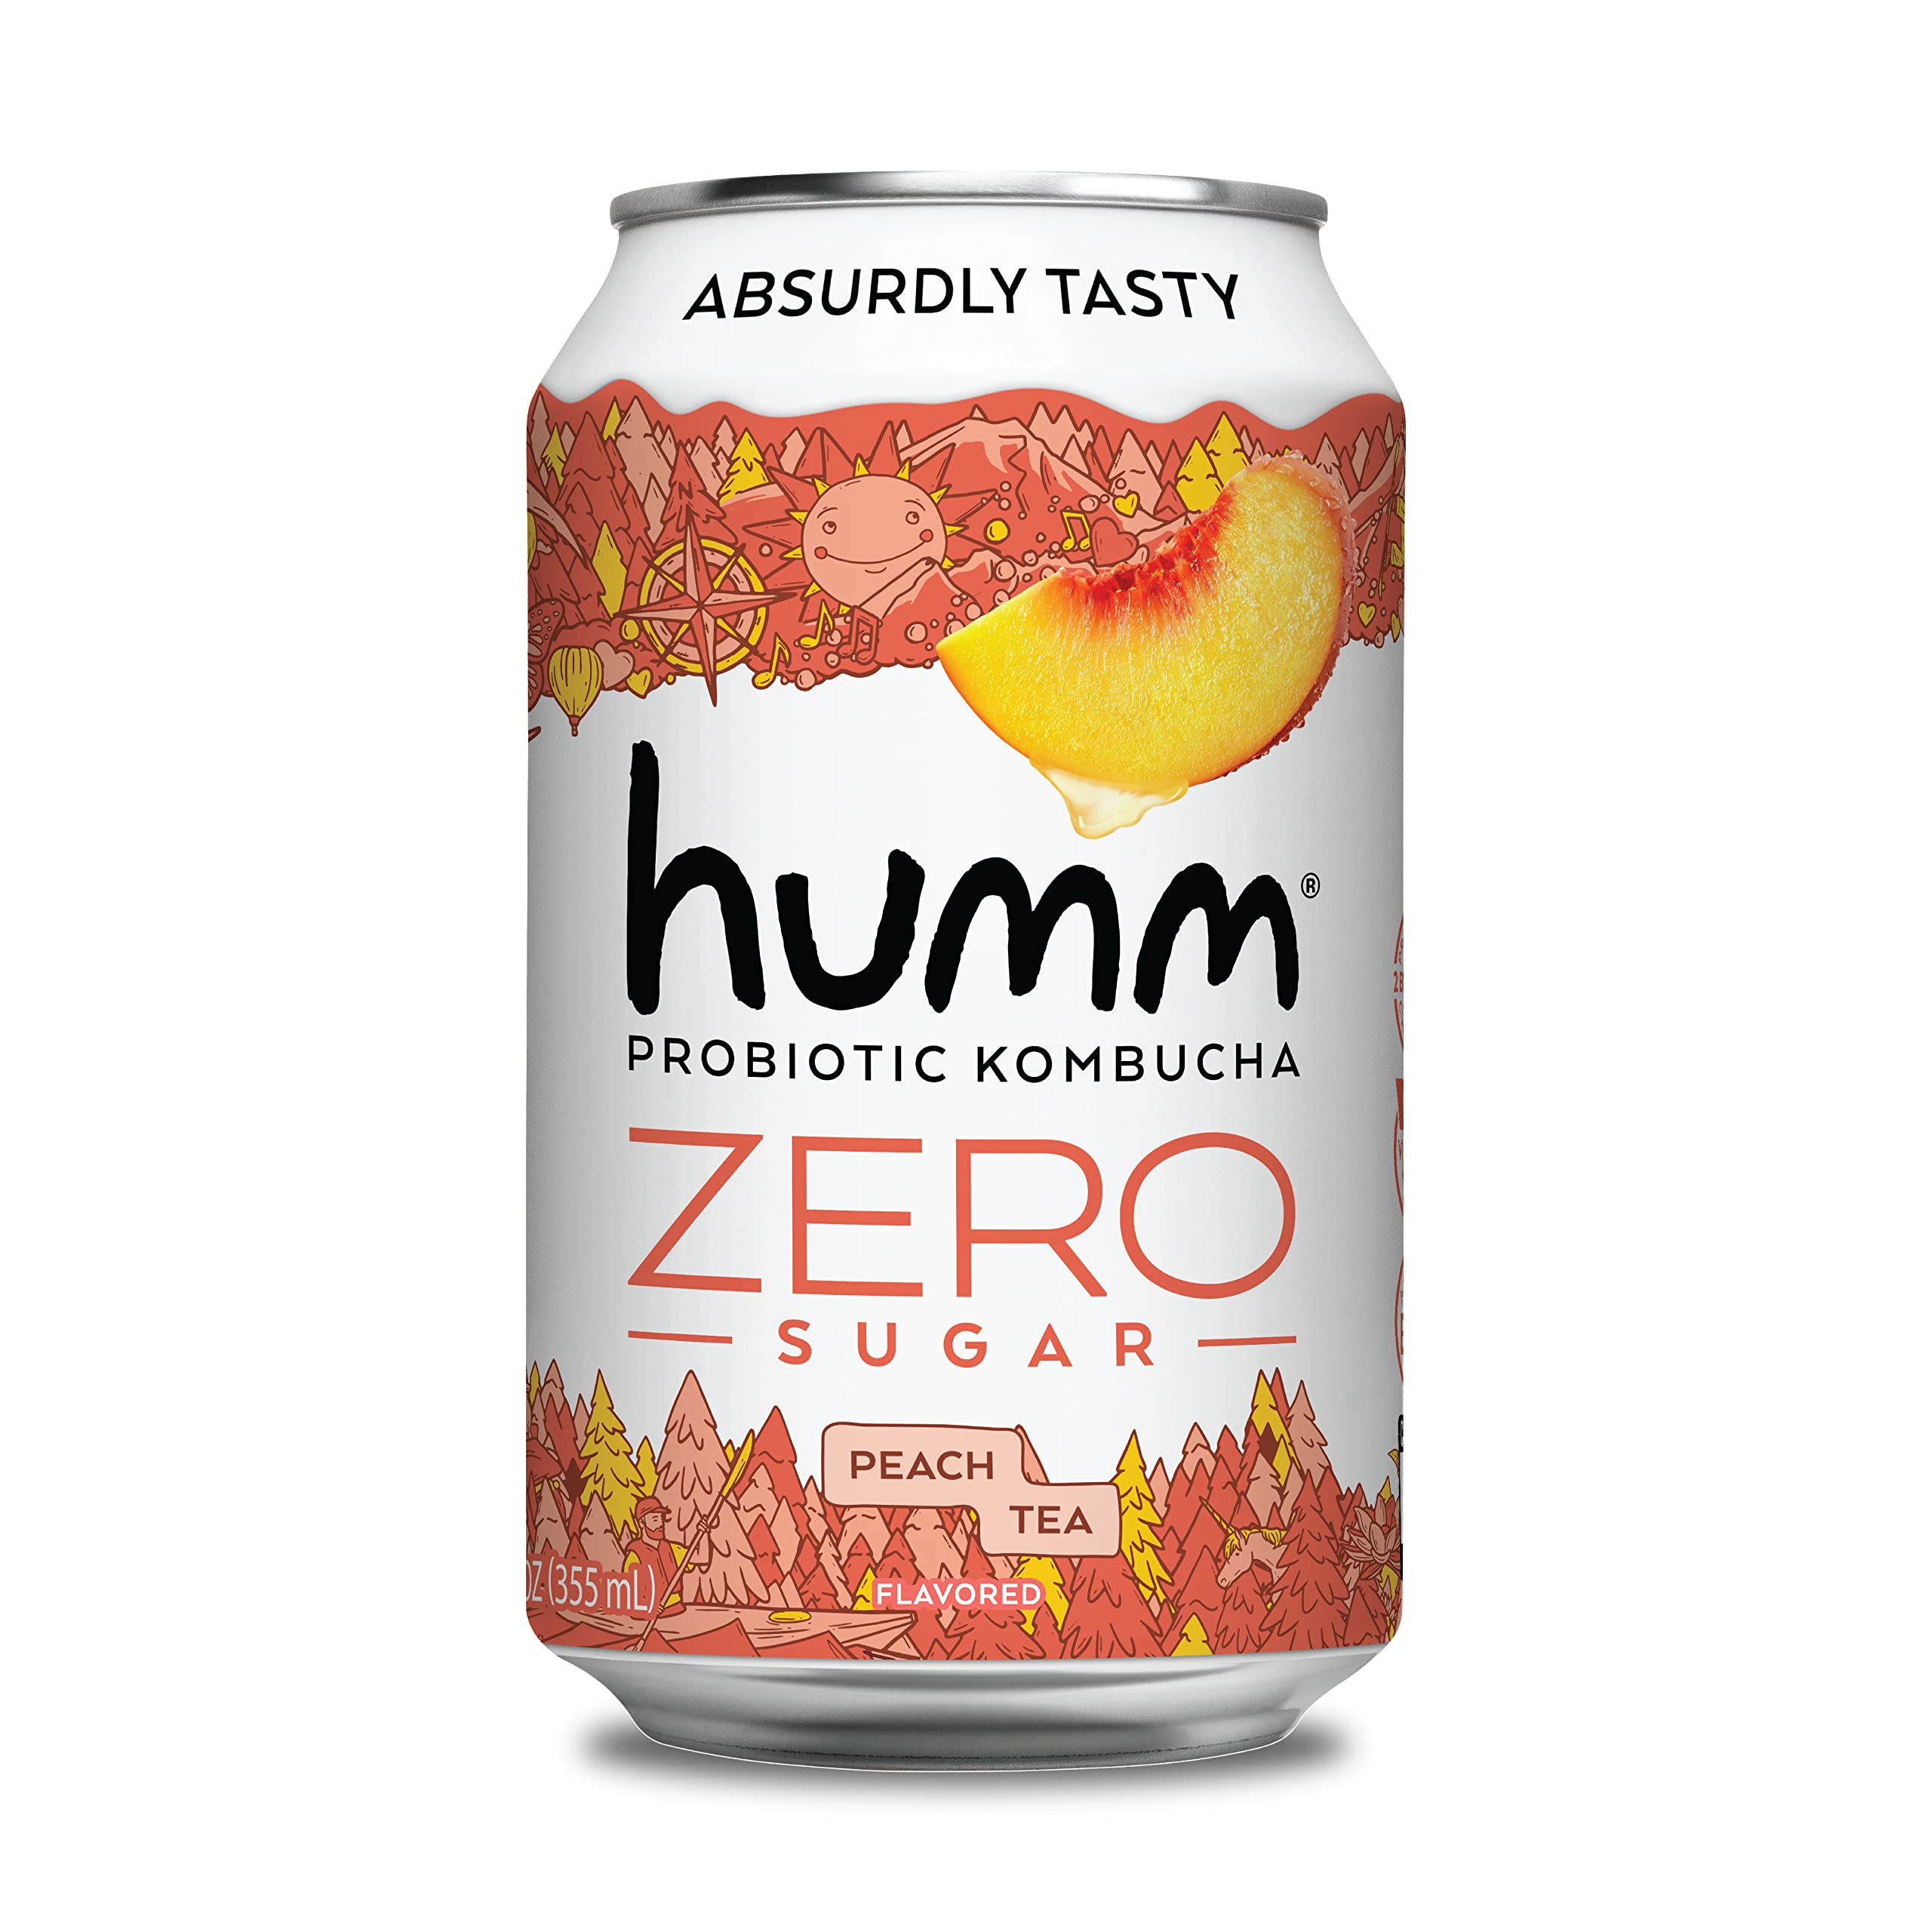 Humm Probiotic Kombucha Zero Sugar Peach Tea - No Refrigeration Needed, Keto-Friendly, Organic, Vegan, gluten-Free - 12oz cans (